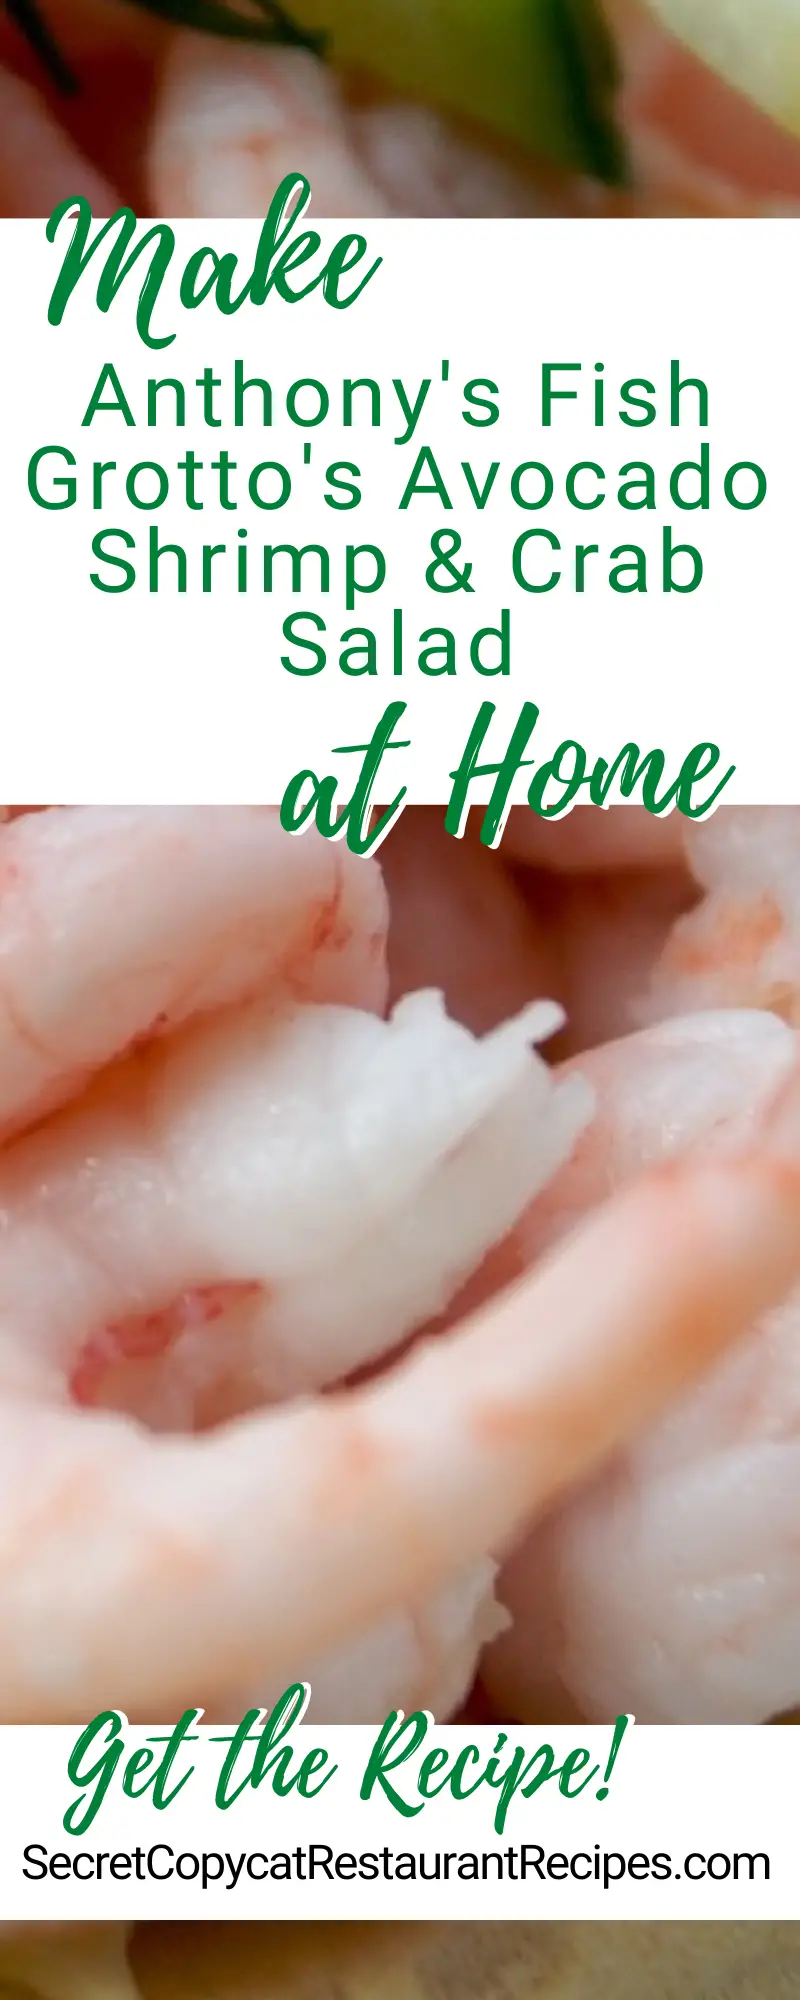 Anthony's Fish Grotto Avocado Shrimp and Crab Salad Recipe